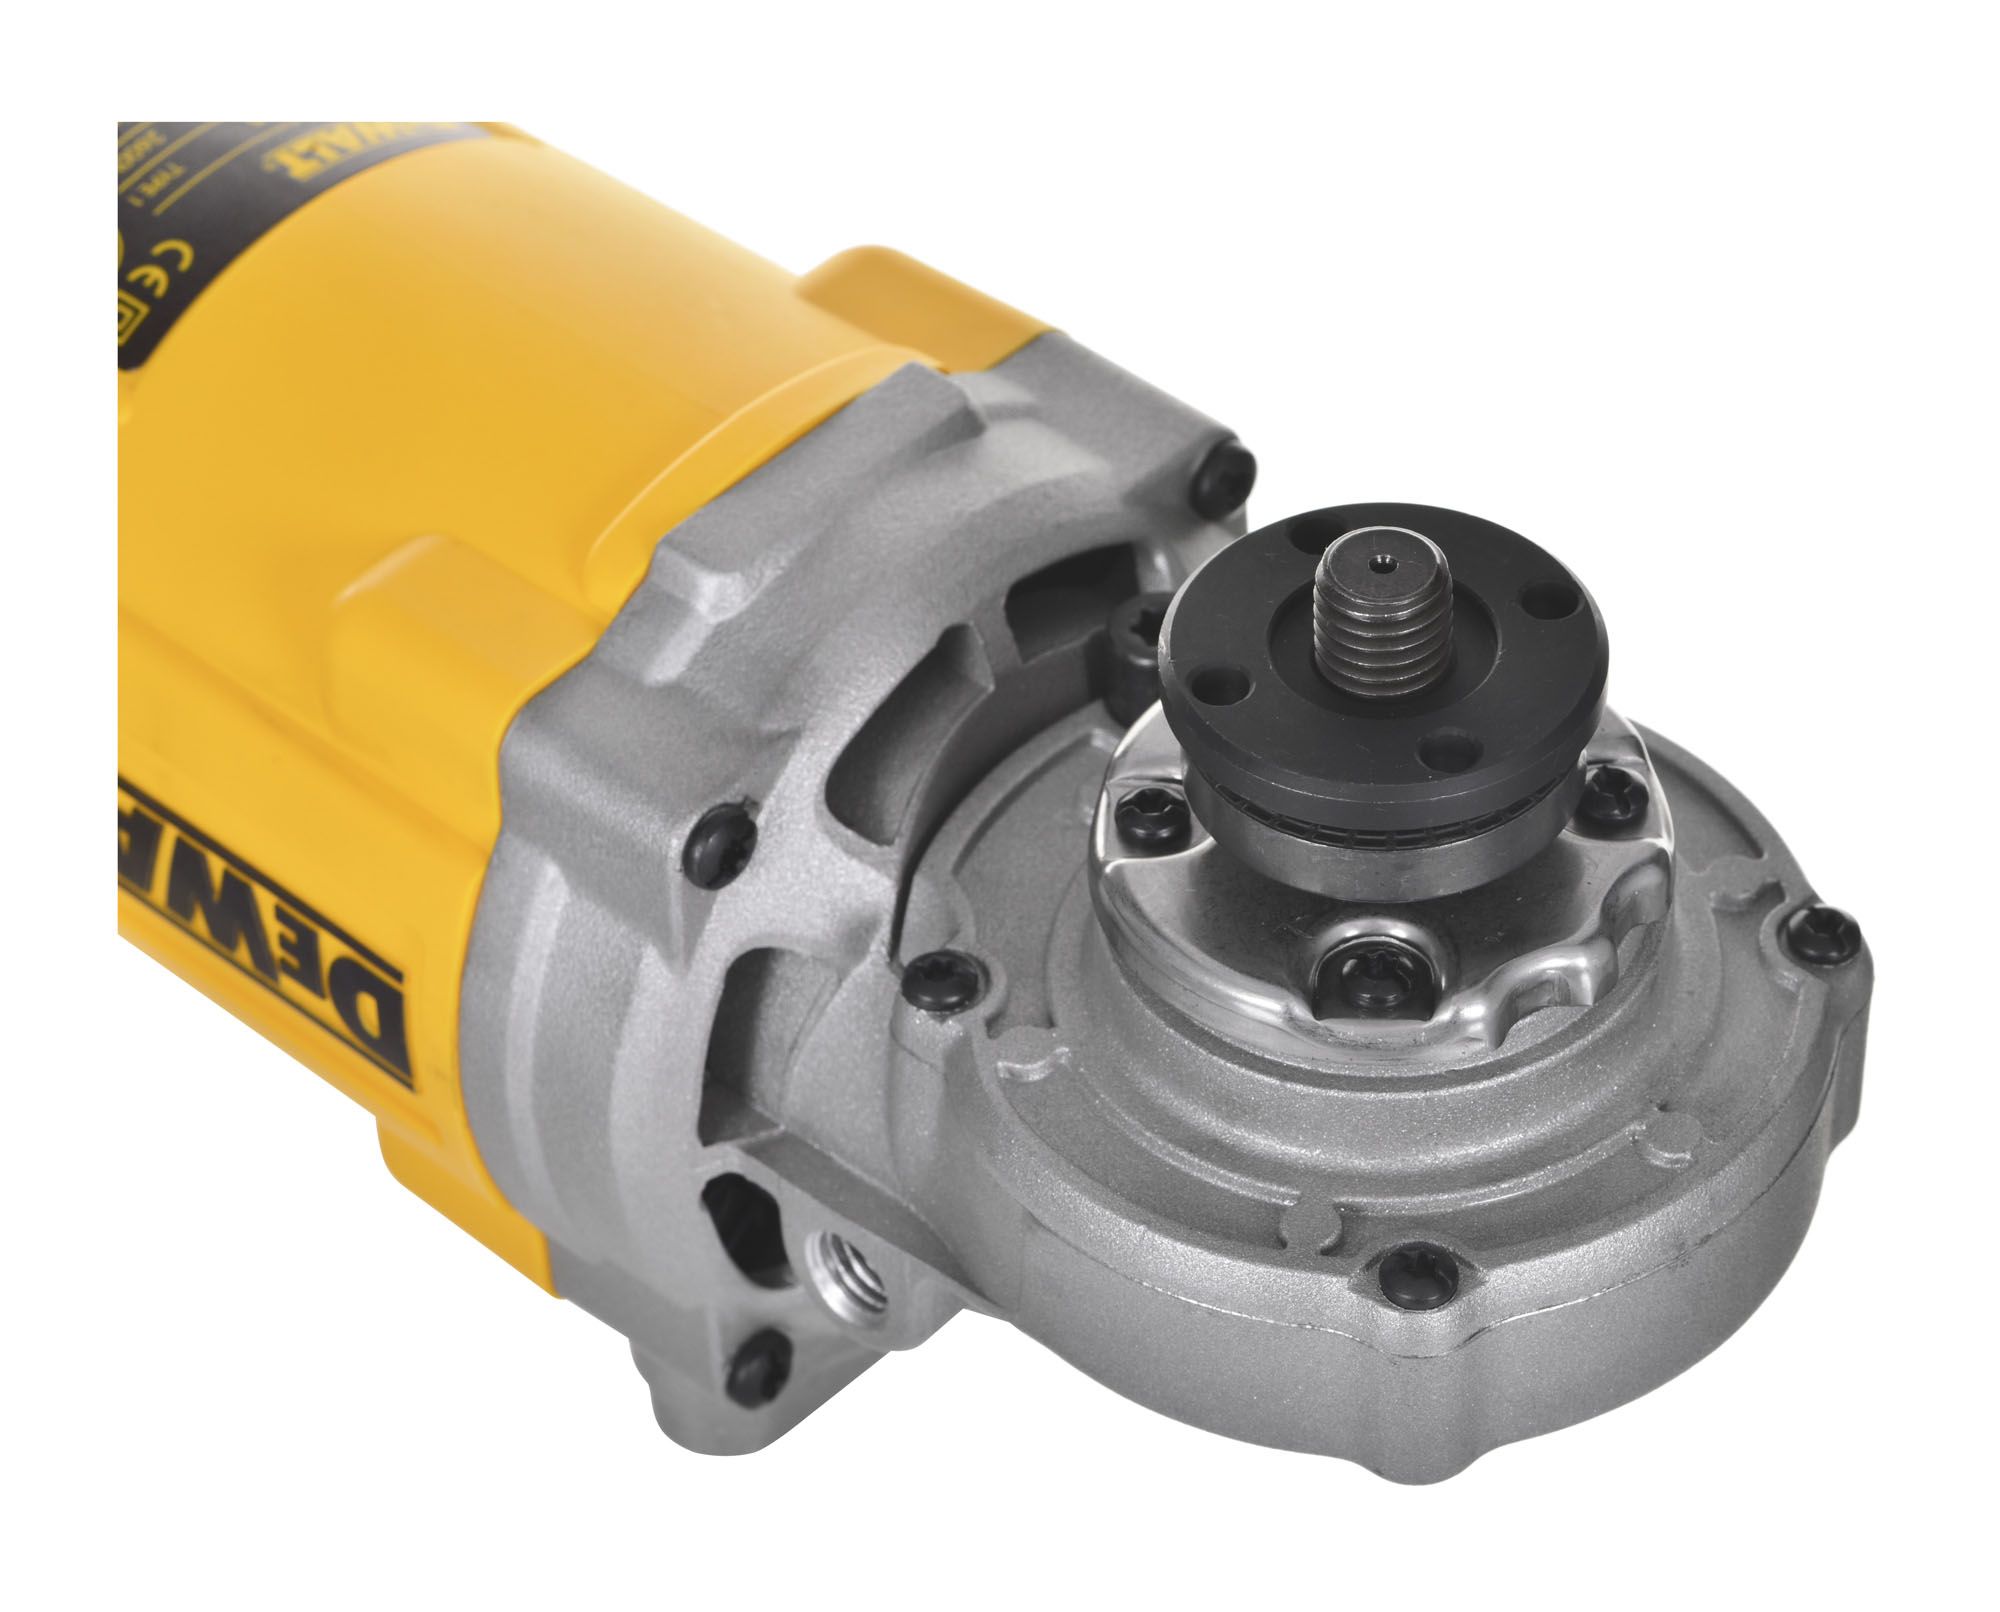 DEWALT DWE496-QS angle grinder 230 mm 2600 W 5,4 kg Black, Yellow_4